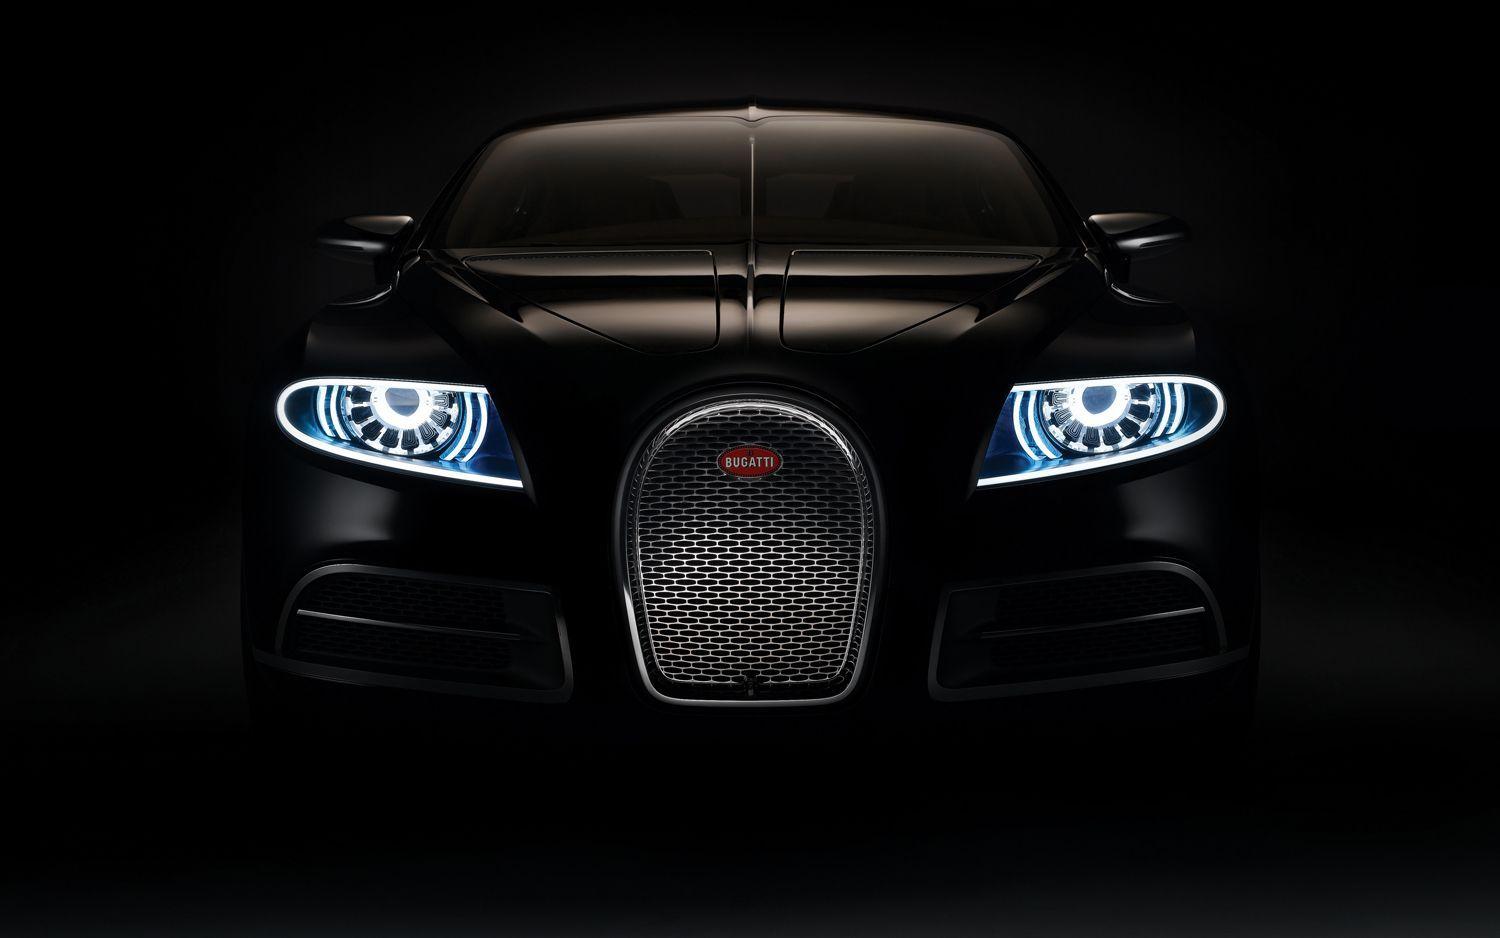 Bugatti Veyron Logo - Buggati-Veyron-front-headlight Photo on April 30, 2012 | Things I ...